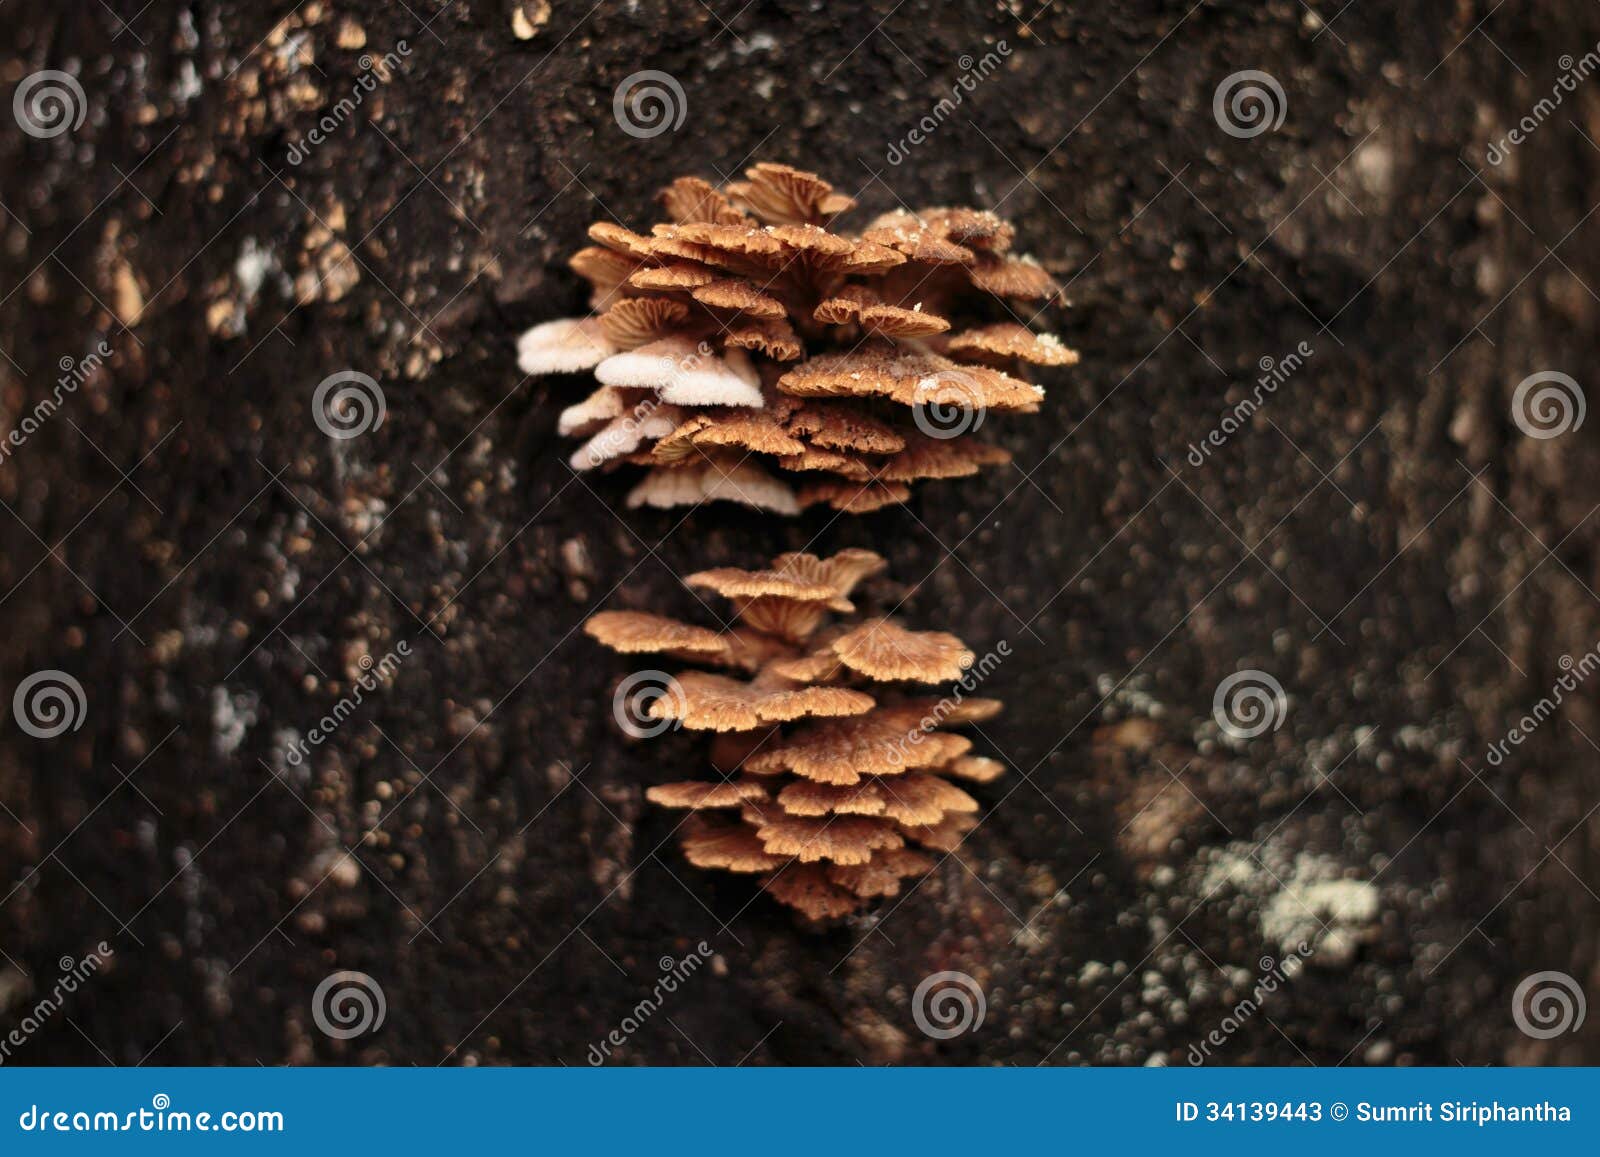 schizophyllum commune mushroom on tree